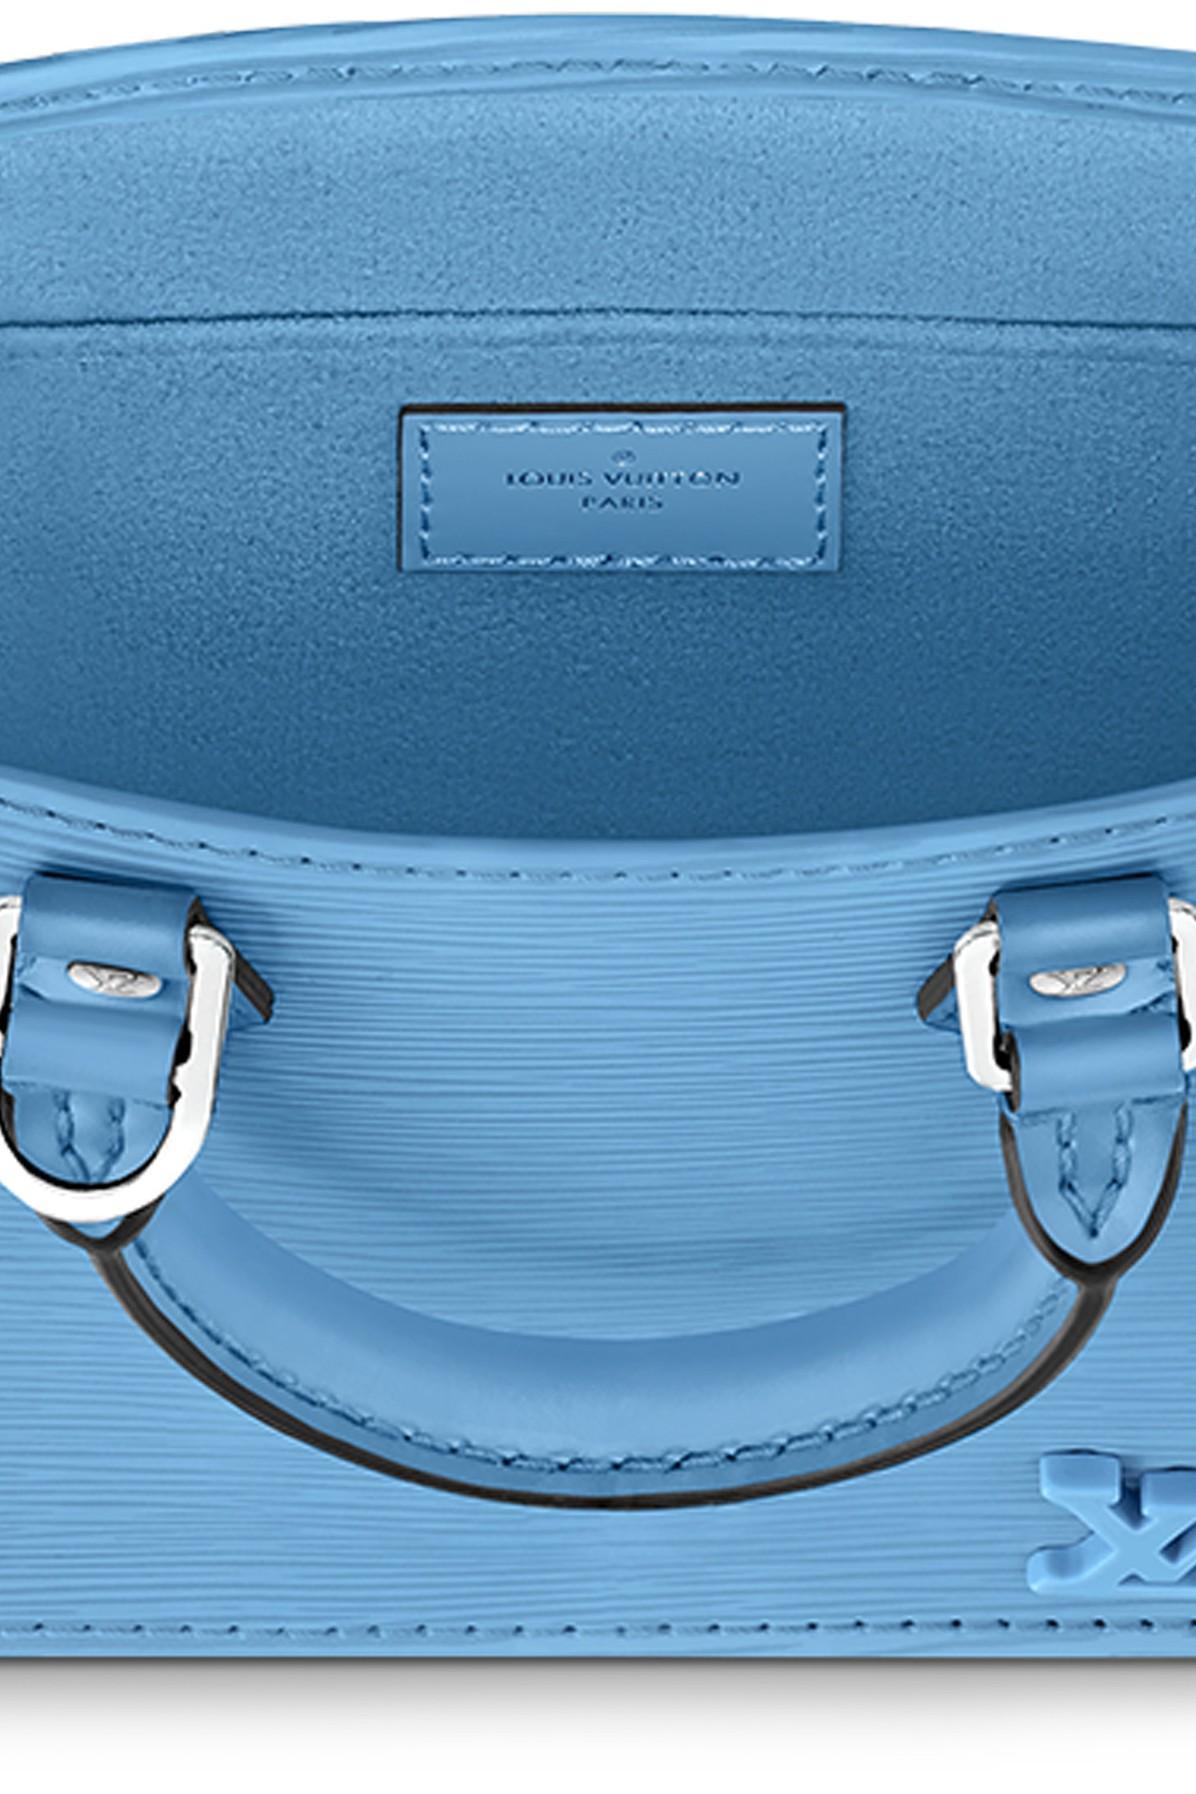 Louis Vuitton PETIT SAC PLAT M80449 BLUE/PINK/BEIGE - Luxuryeasy